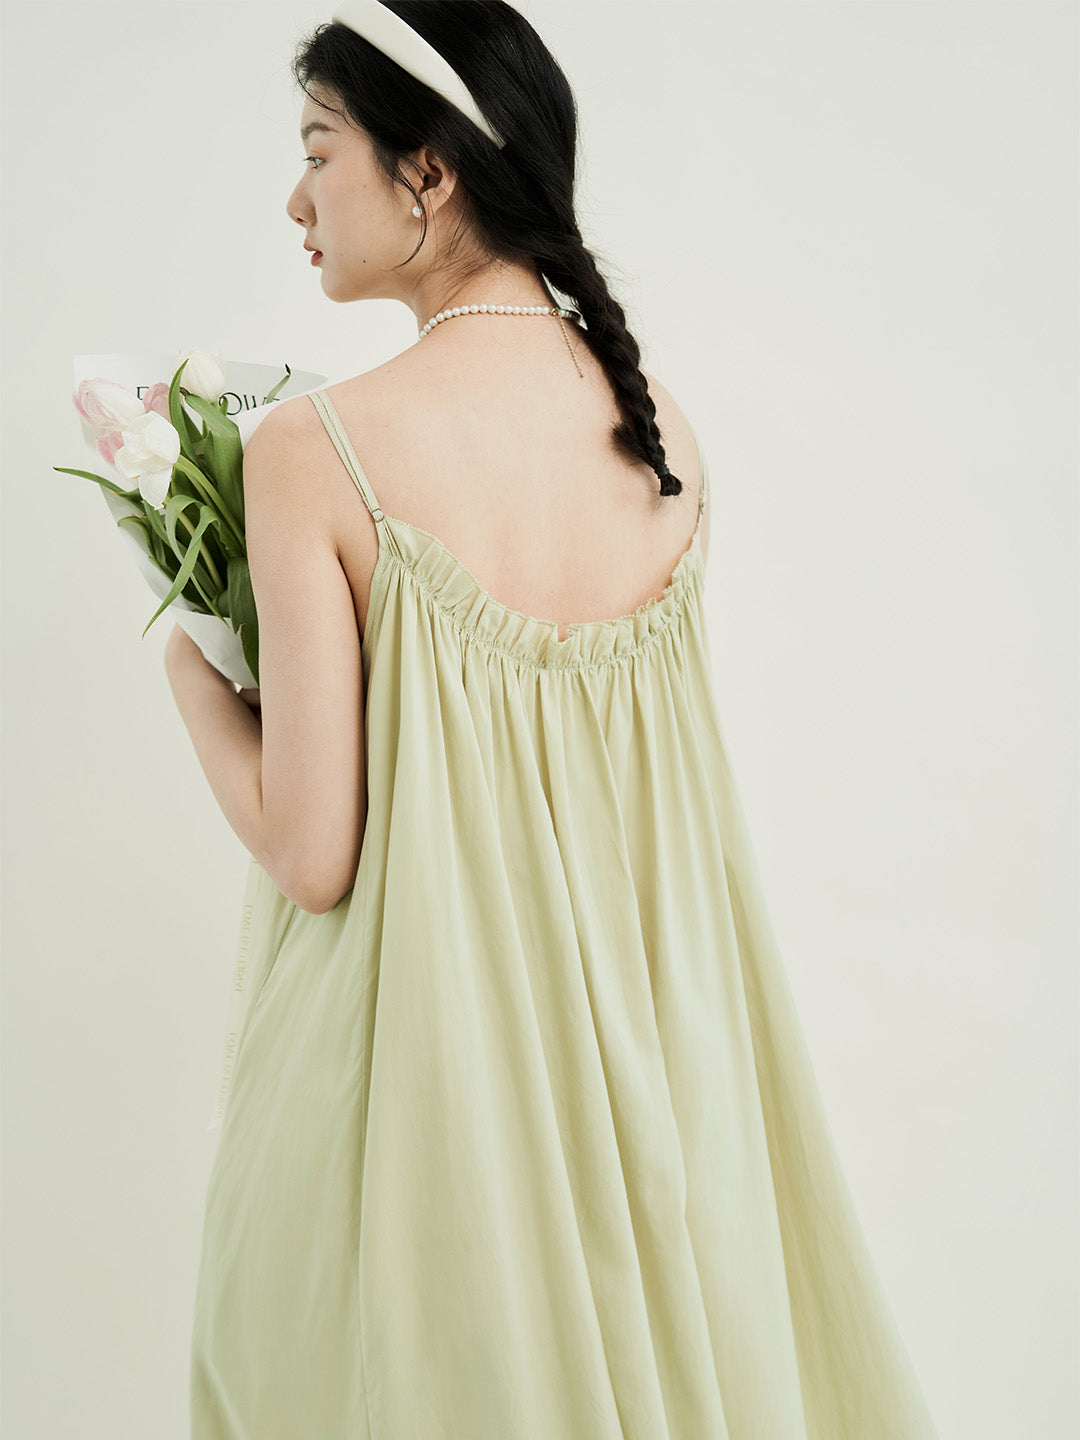 Chowxiaodou Adjustable Style Flared Hem Tencel Camisole Dress